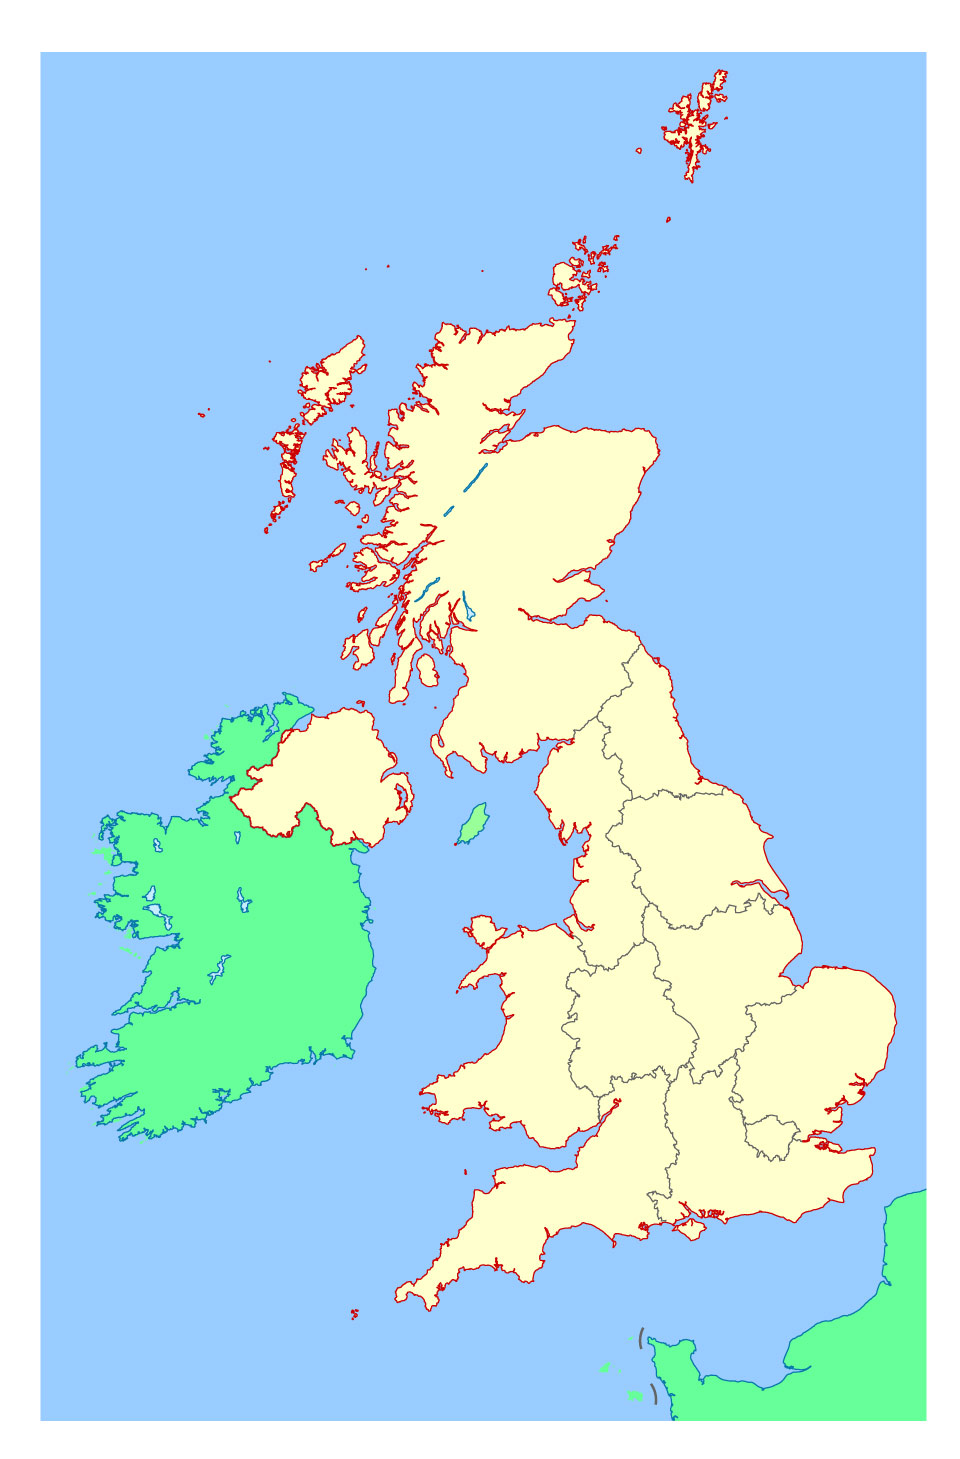 free_vector_map_england_scotland_ireland